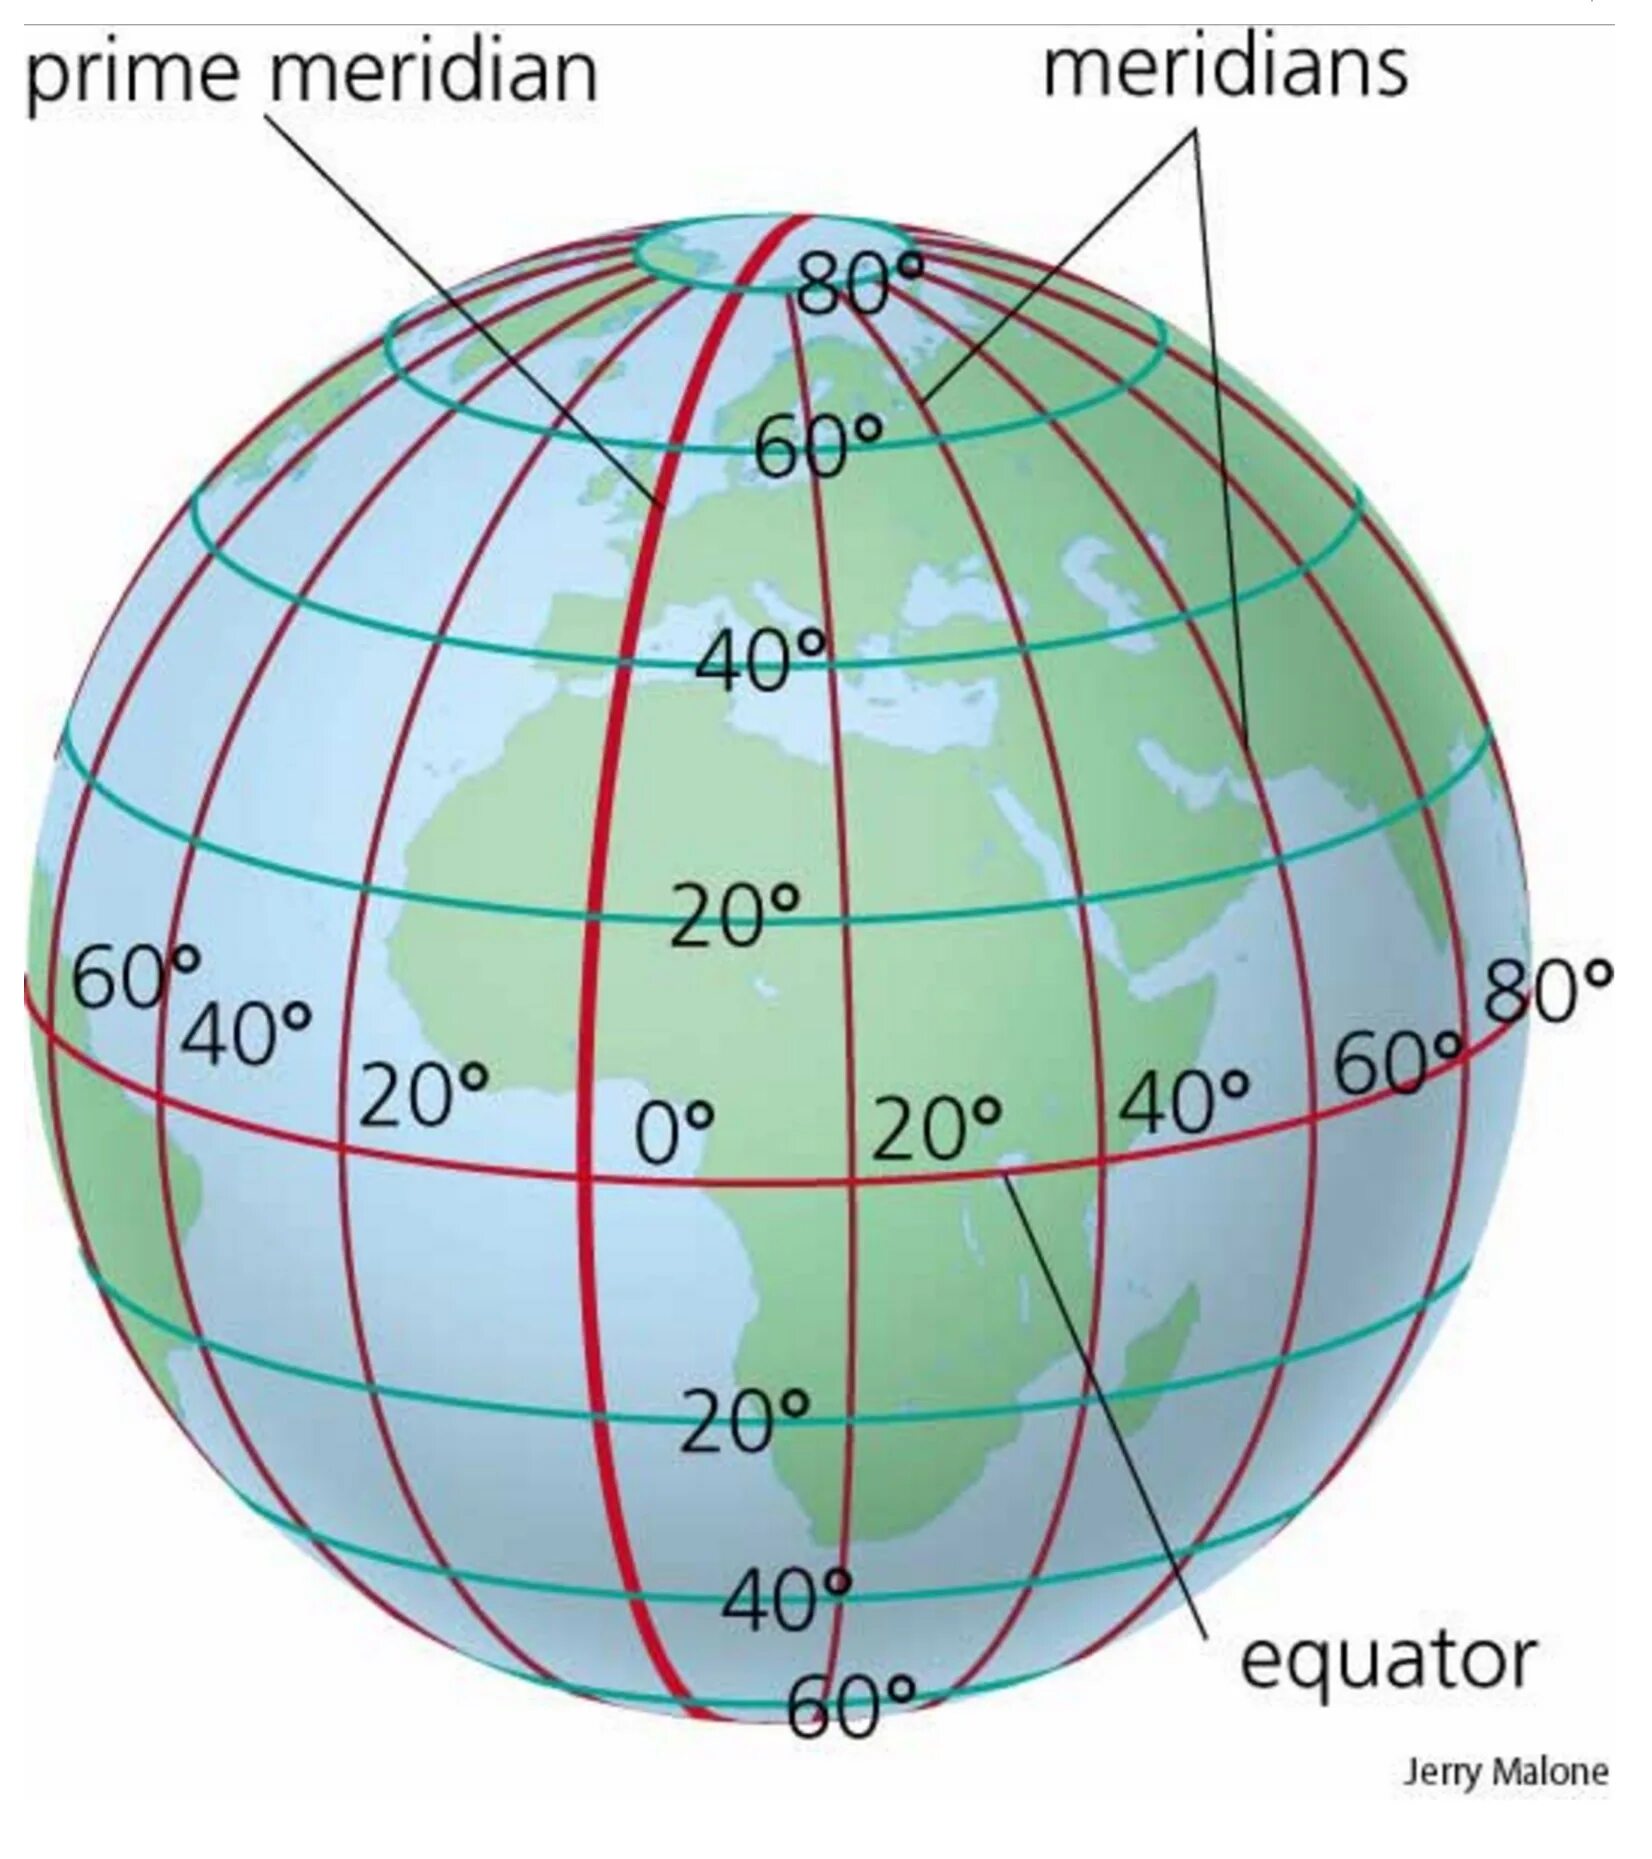 Нулевой Меридиан и 180 Меридиан. Экватор Гринвичский Меридиан Меридиан 180. Экватор Меридиан параллель. Меридианы и параллели на глобусе широта и долгота.